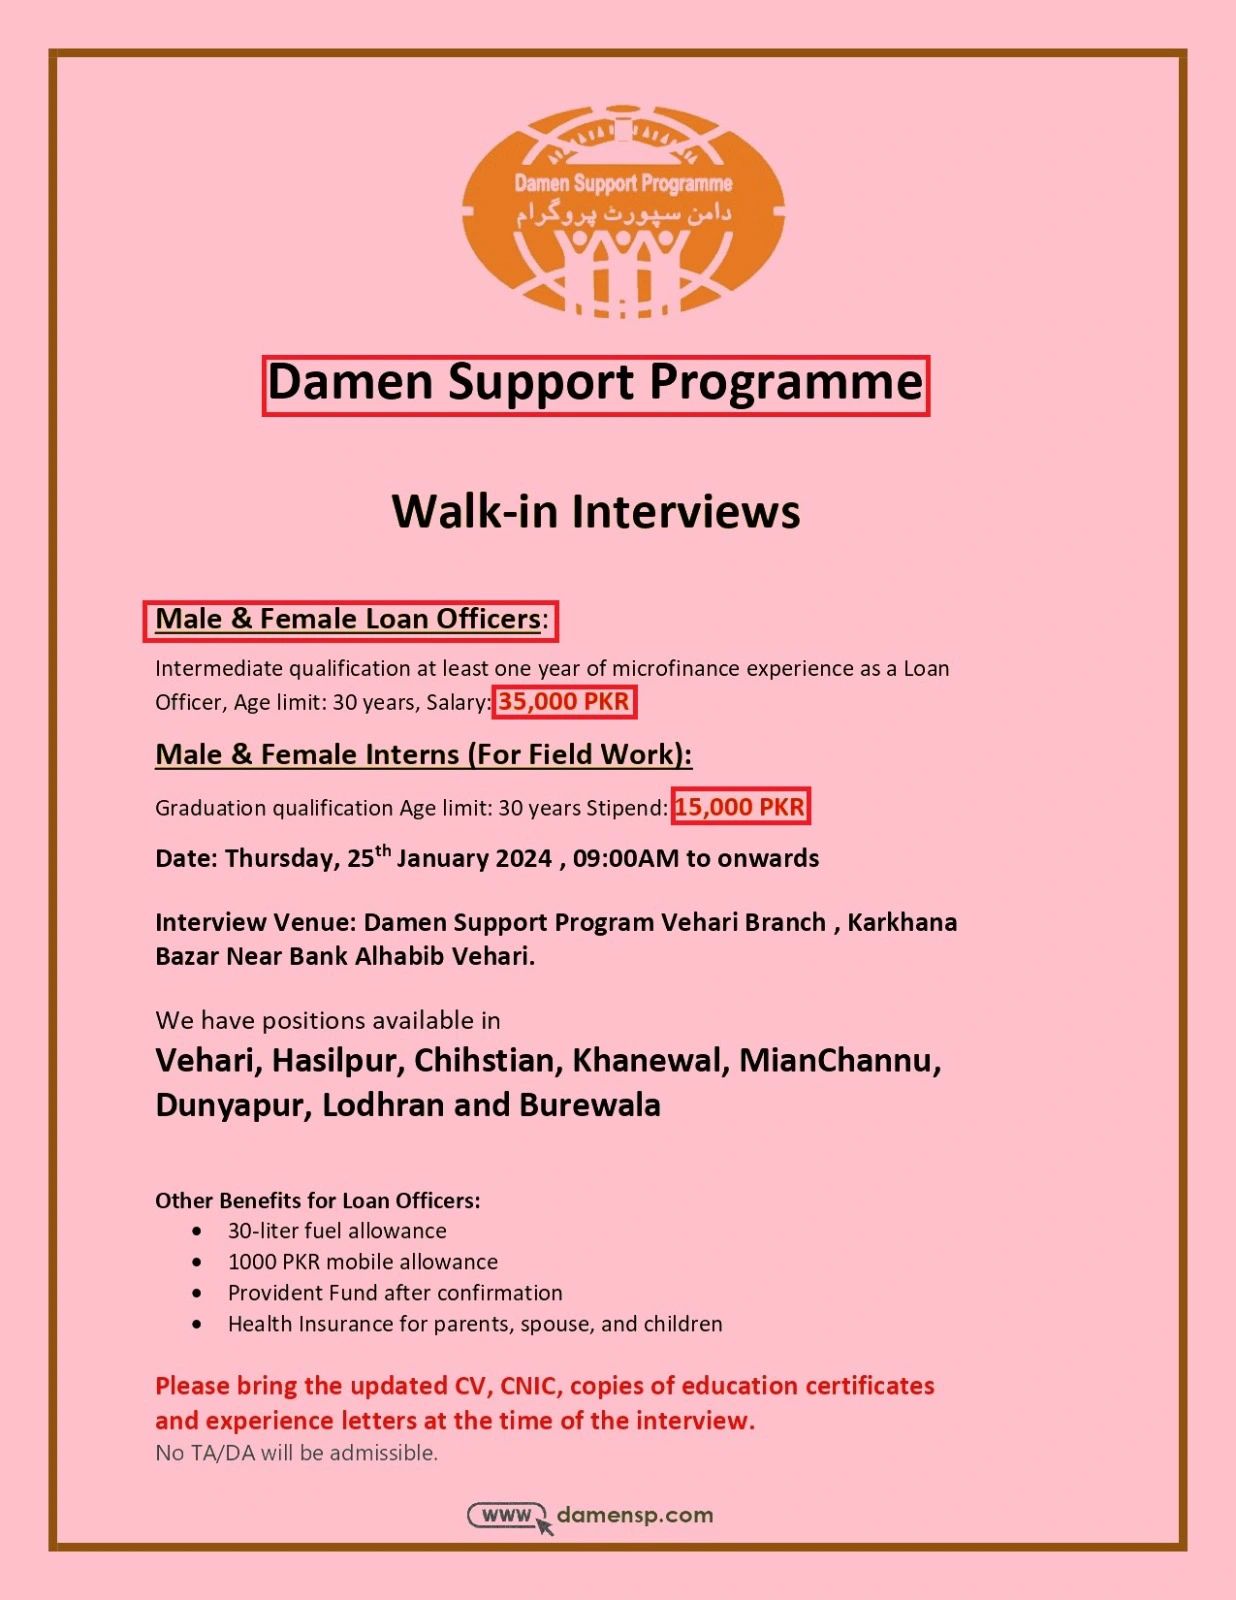 Damen Support Programme- دامن سپورٹ پروگرام (DSP) Walking🚶In Interviews